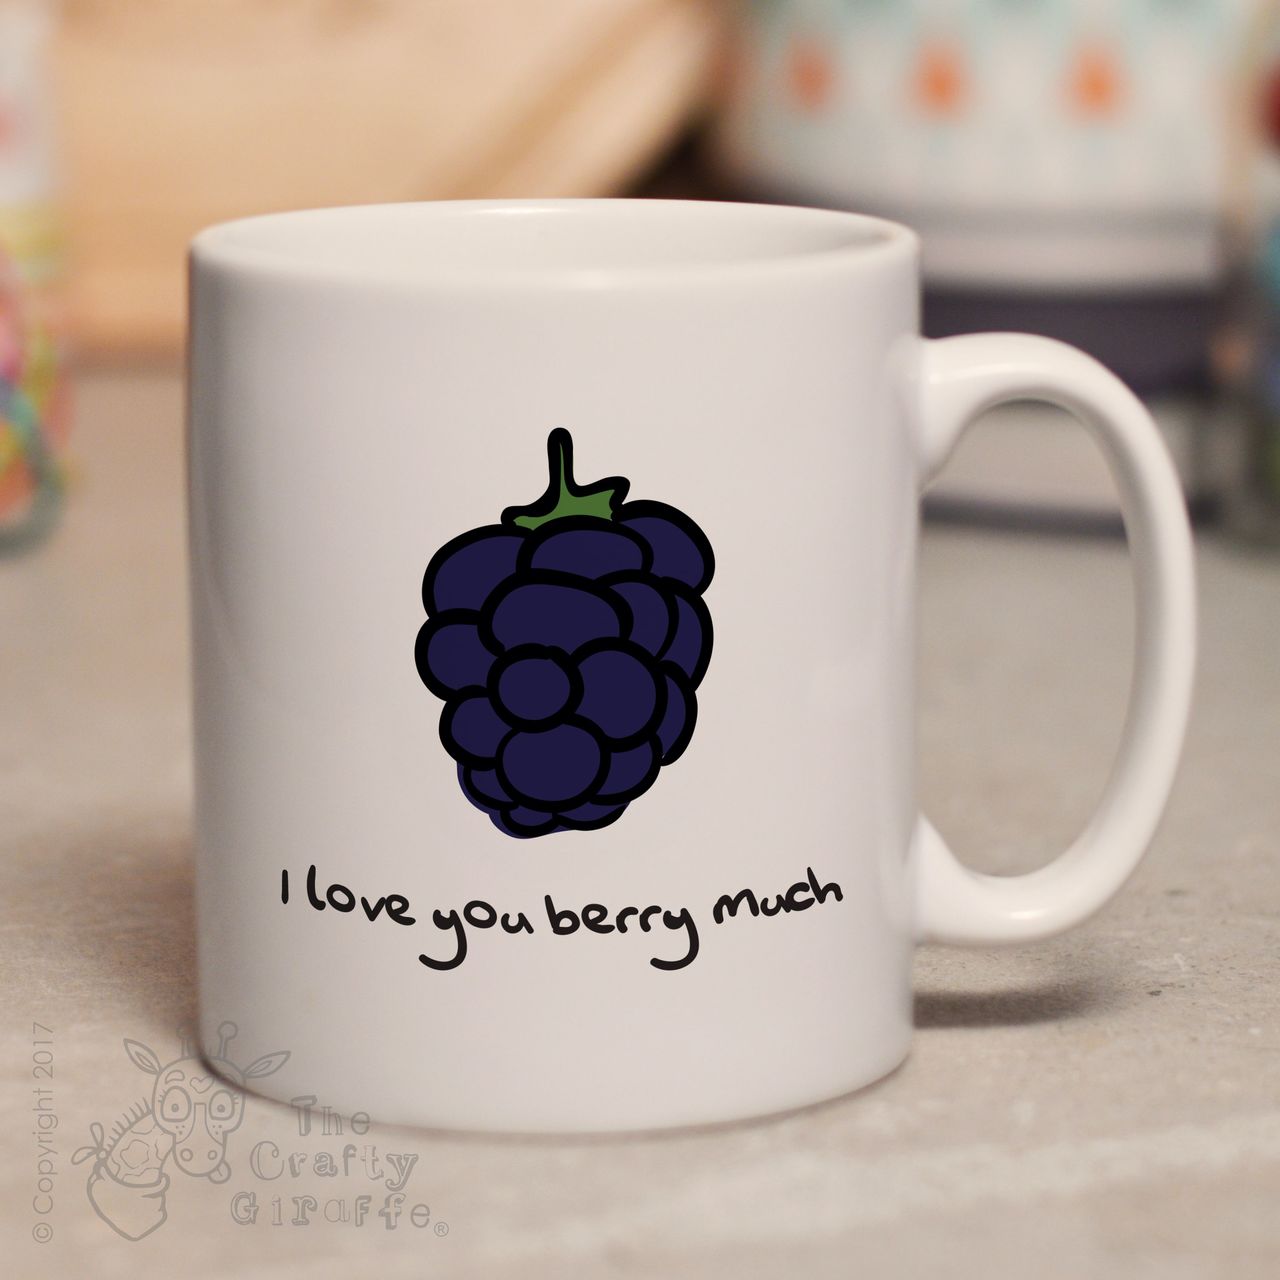 I love you berry much mug